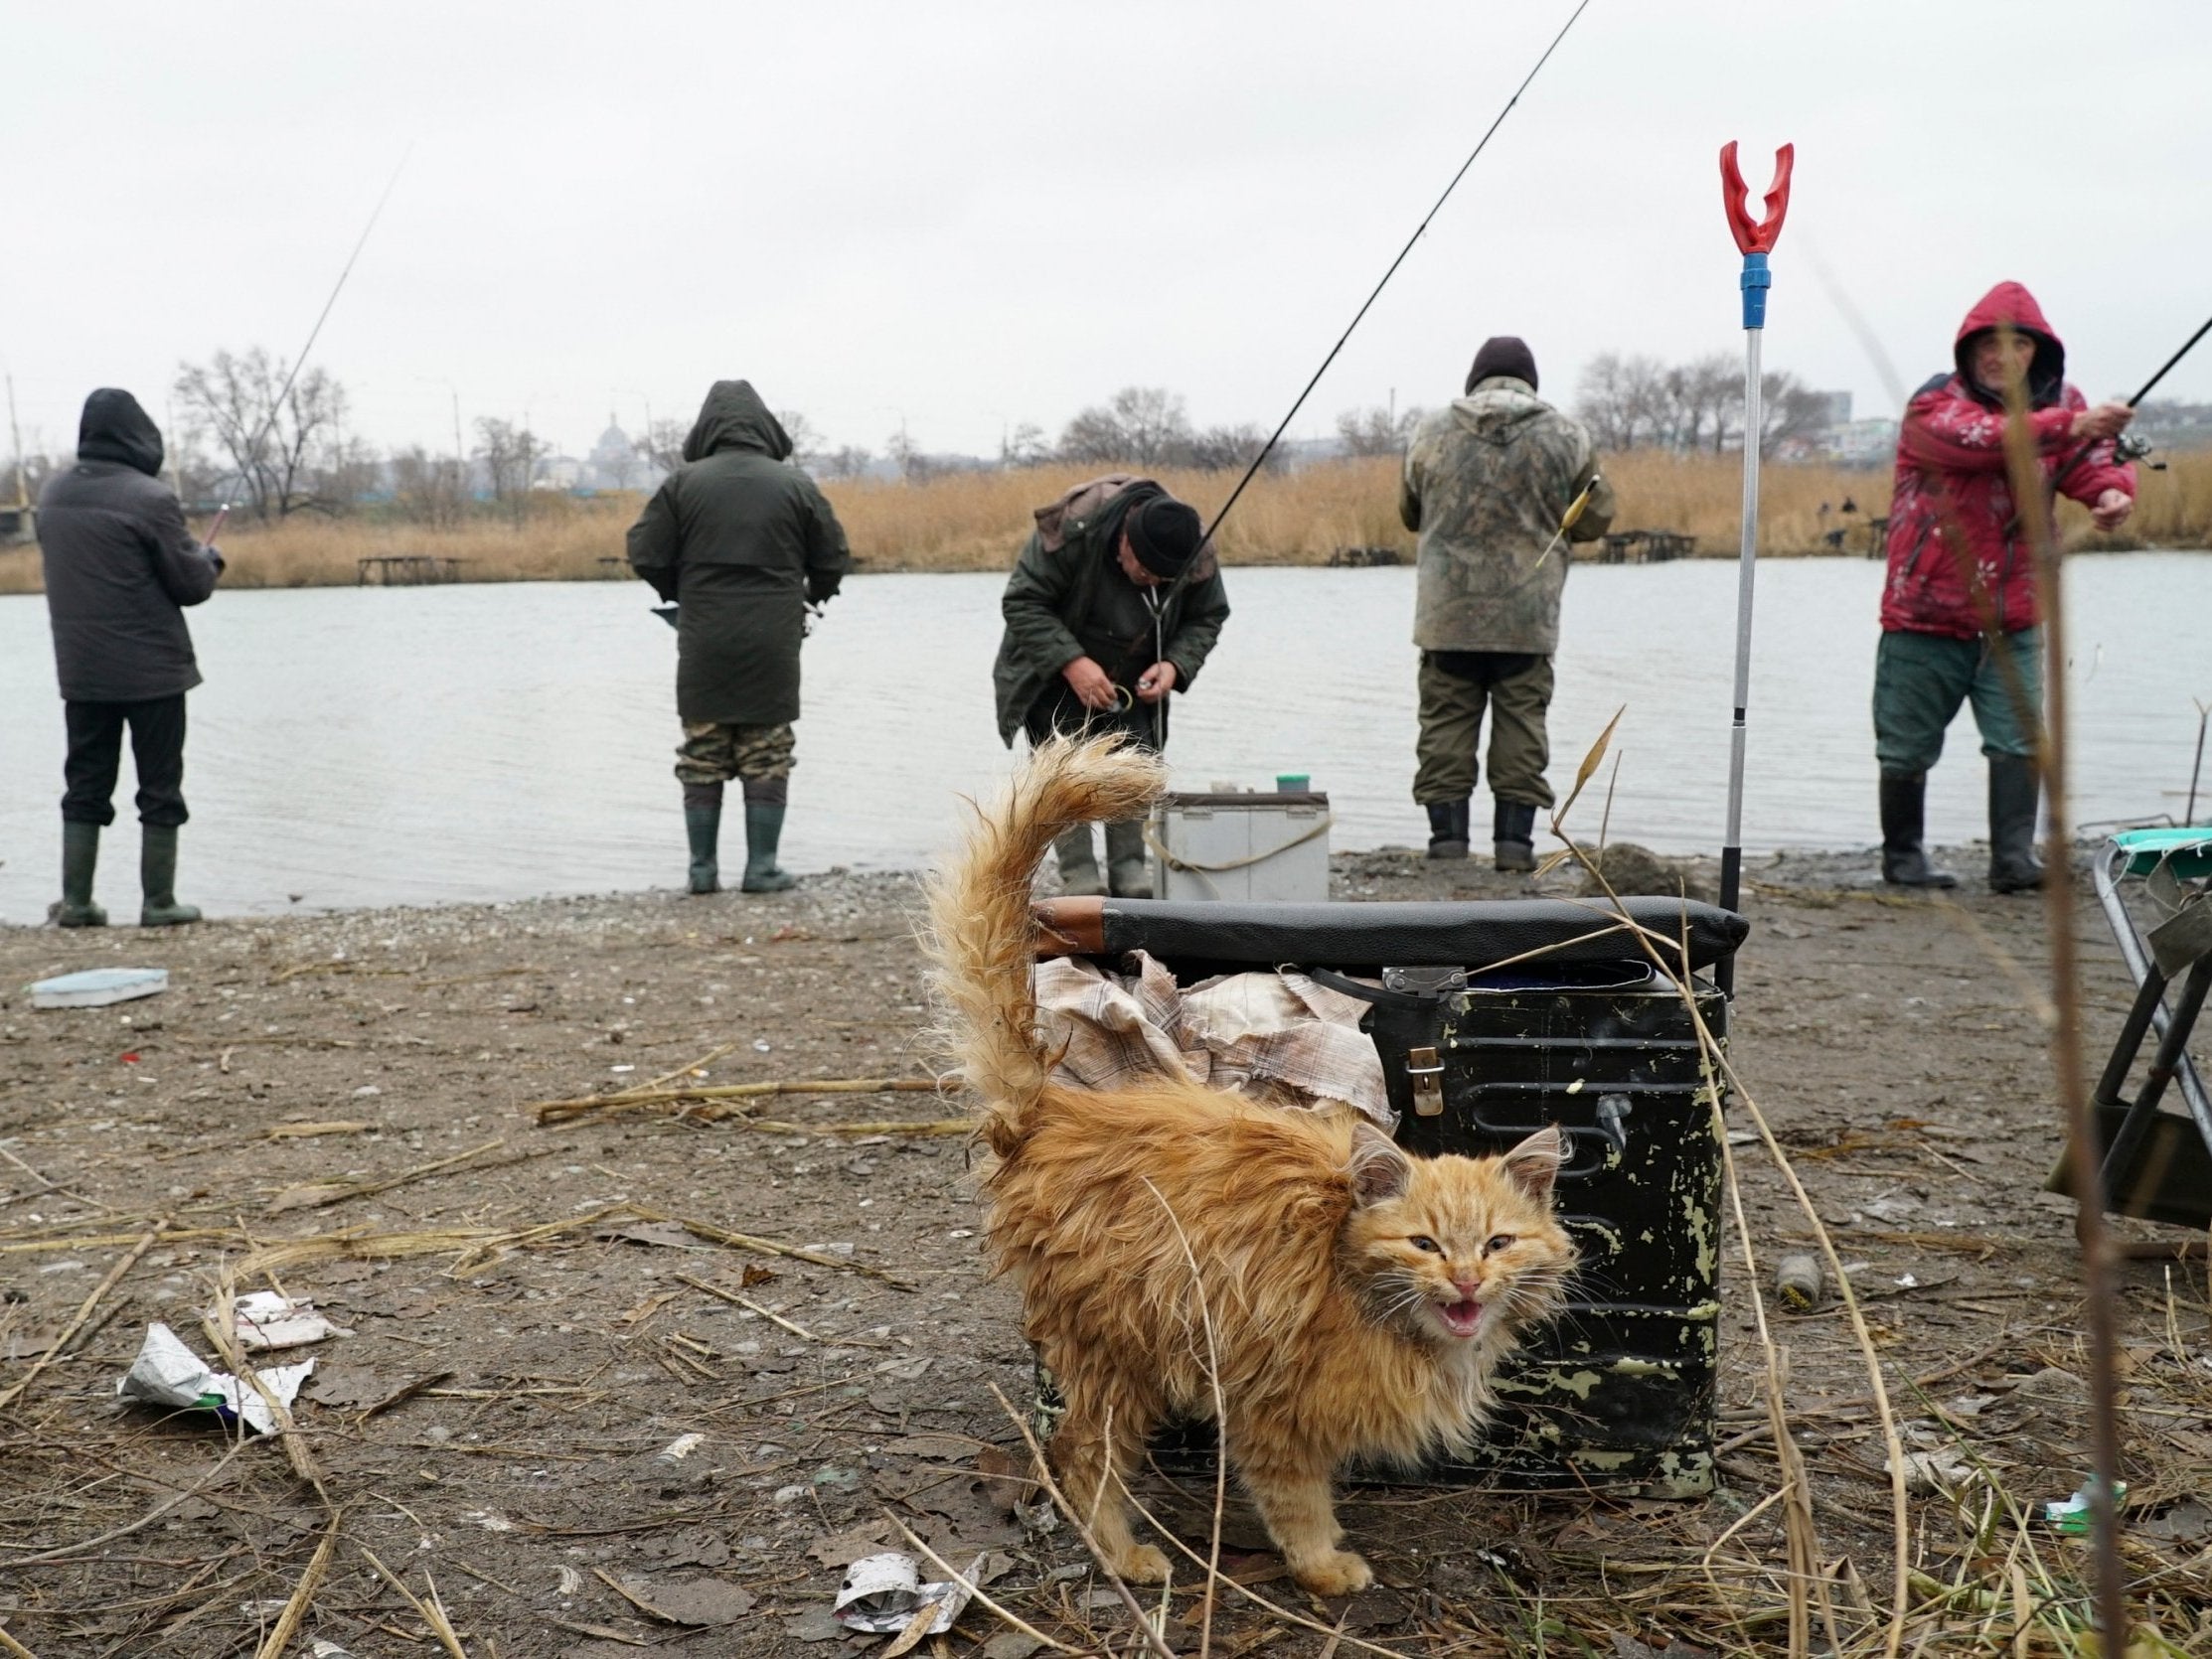 Ukrainian fishermen try to catch fish on the river near Azov steel factory in Mariupol